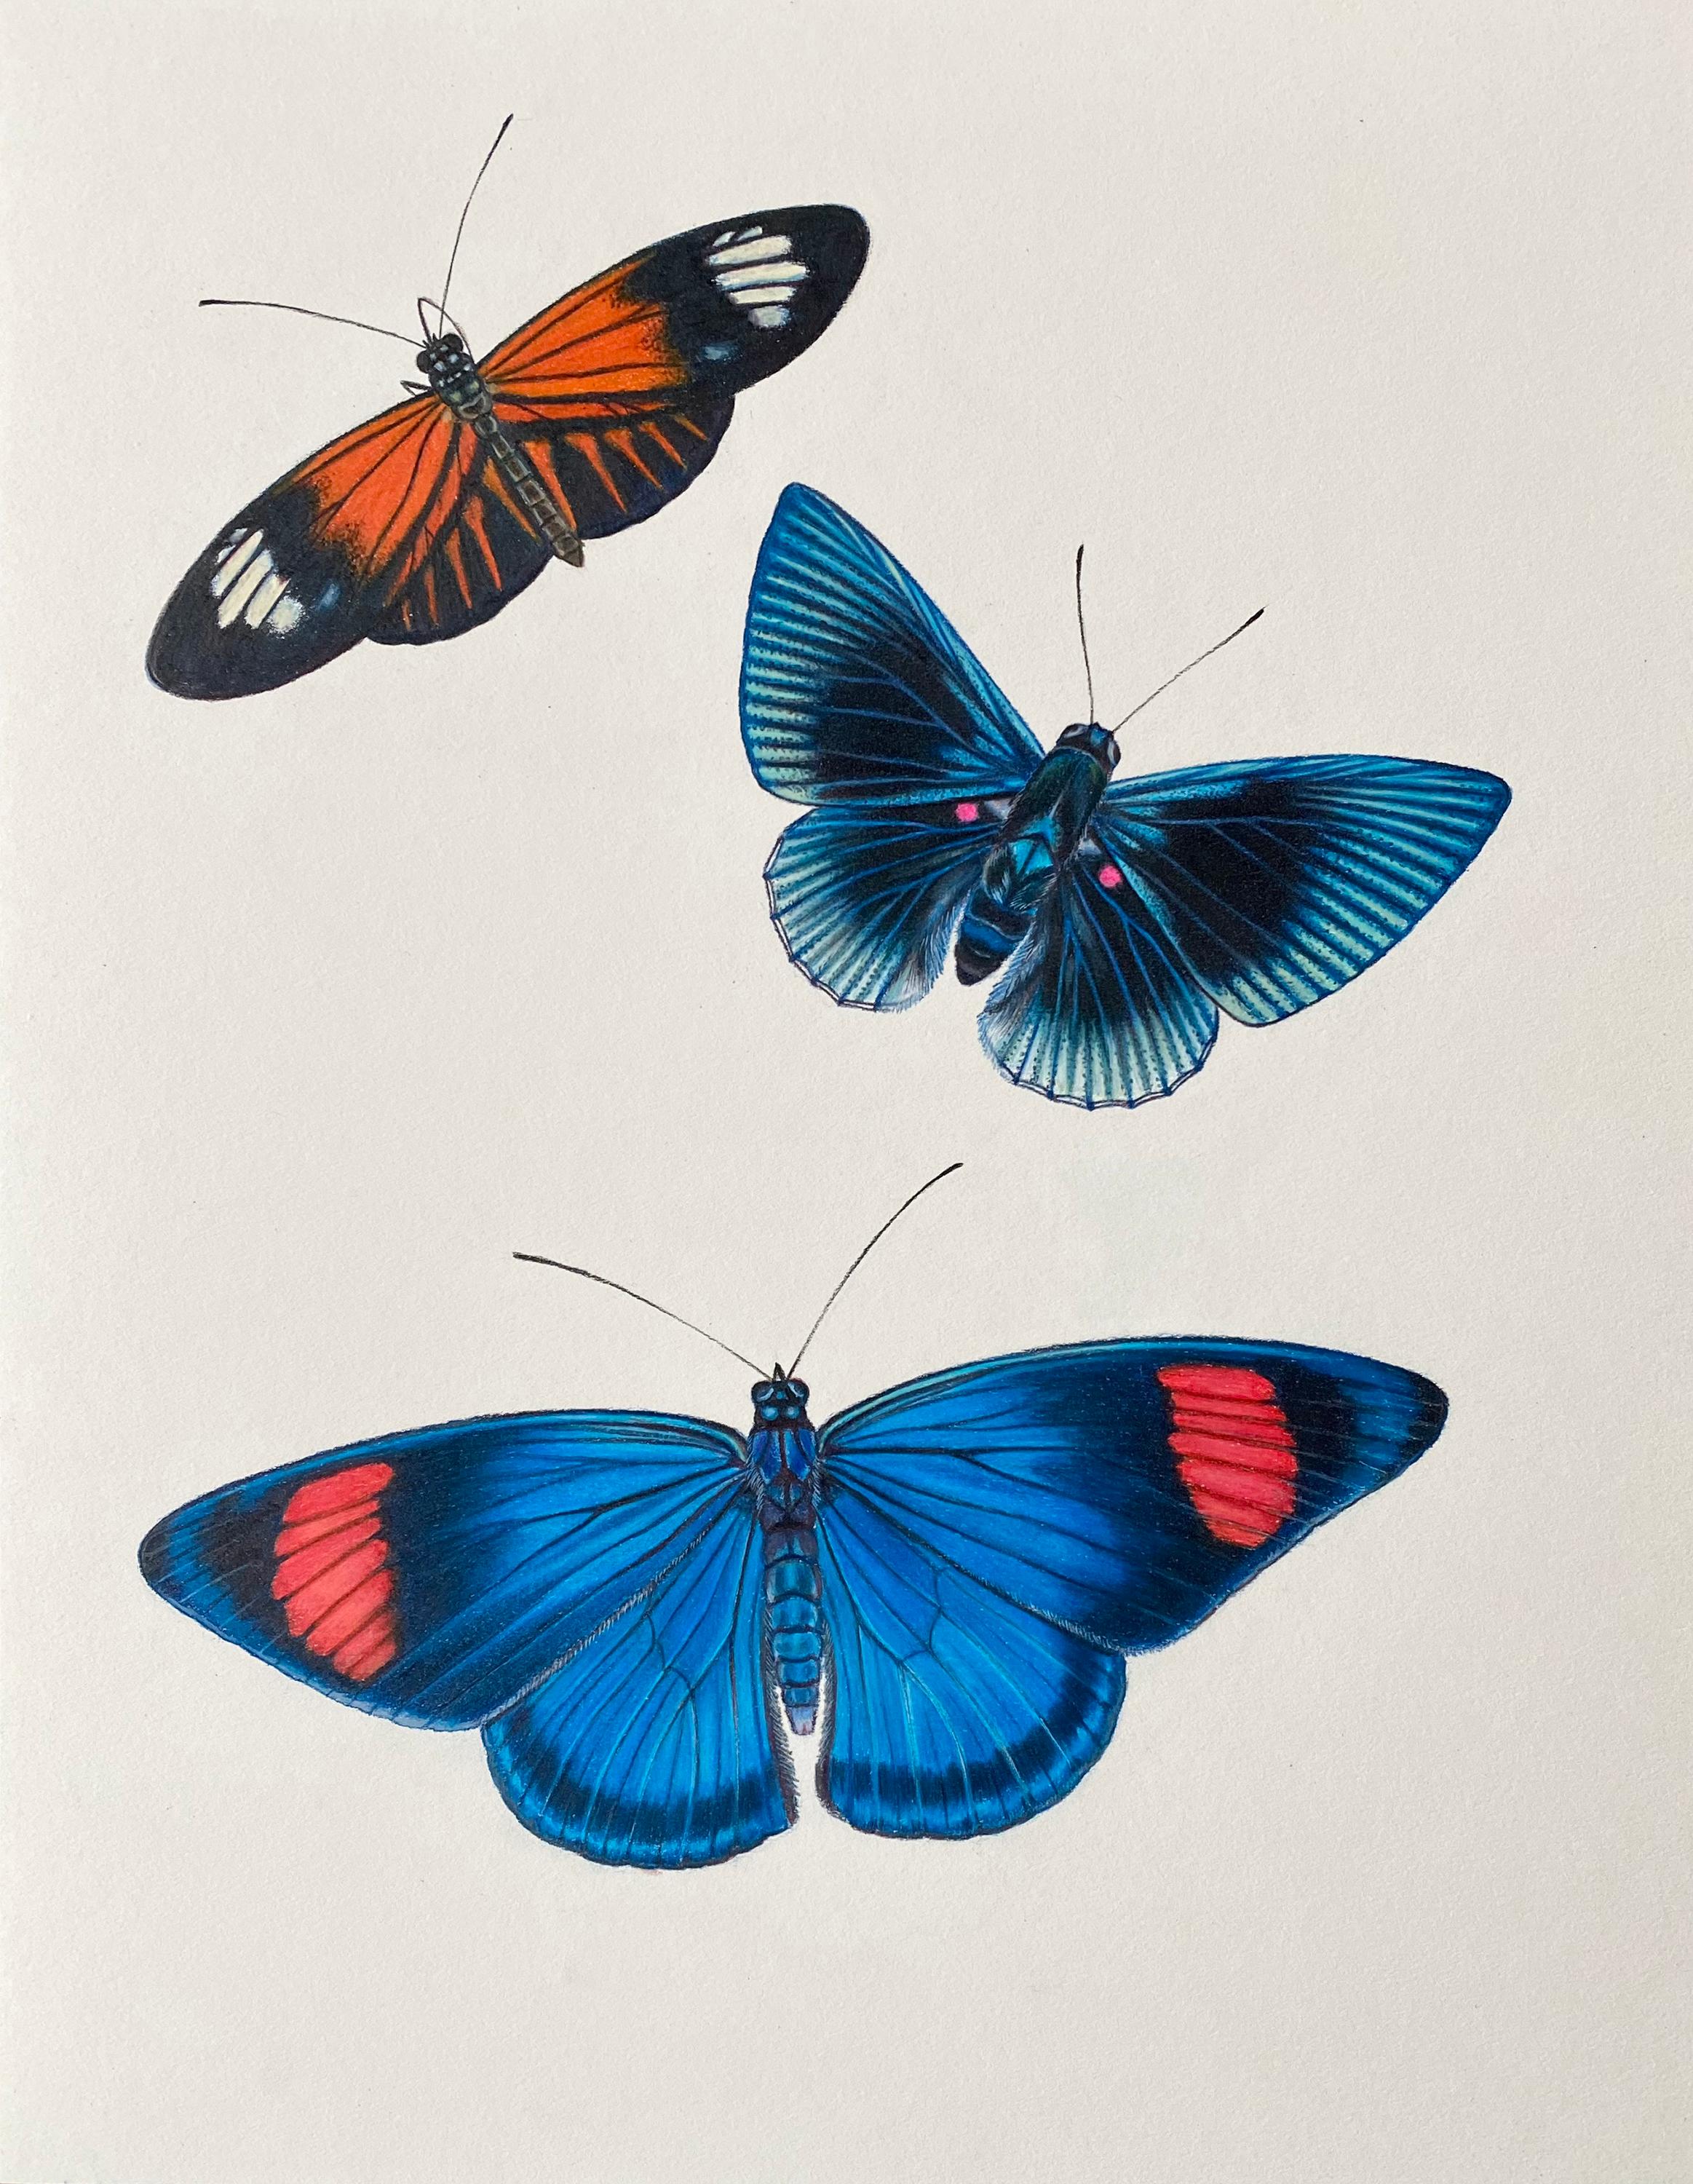 Hannah Hanlon Animal Art - 'Ecuador Blues' - insect illustration - butterflies - hyperrealism - Chuck Close